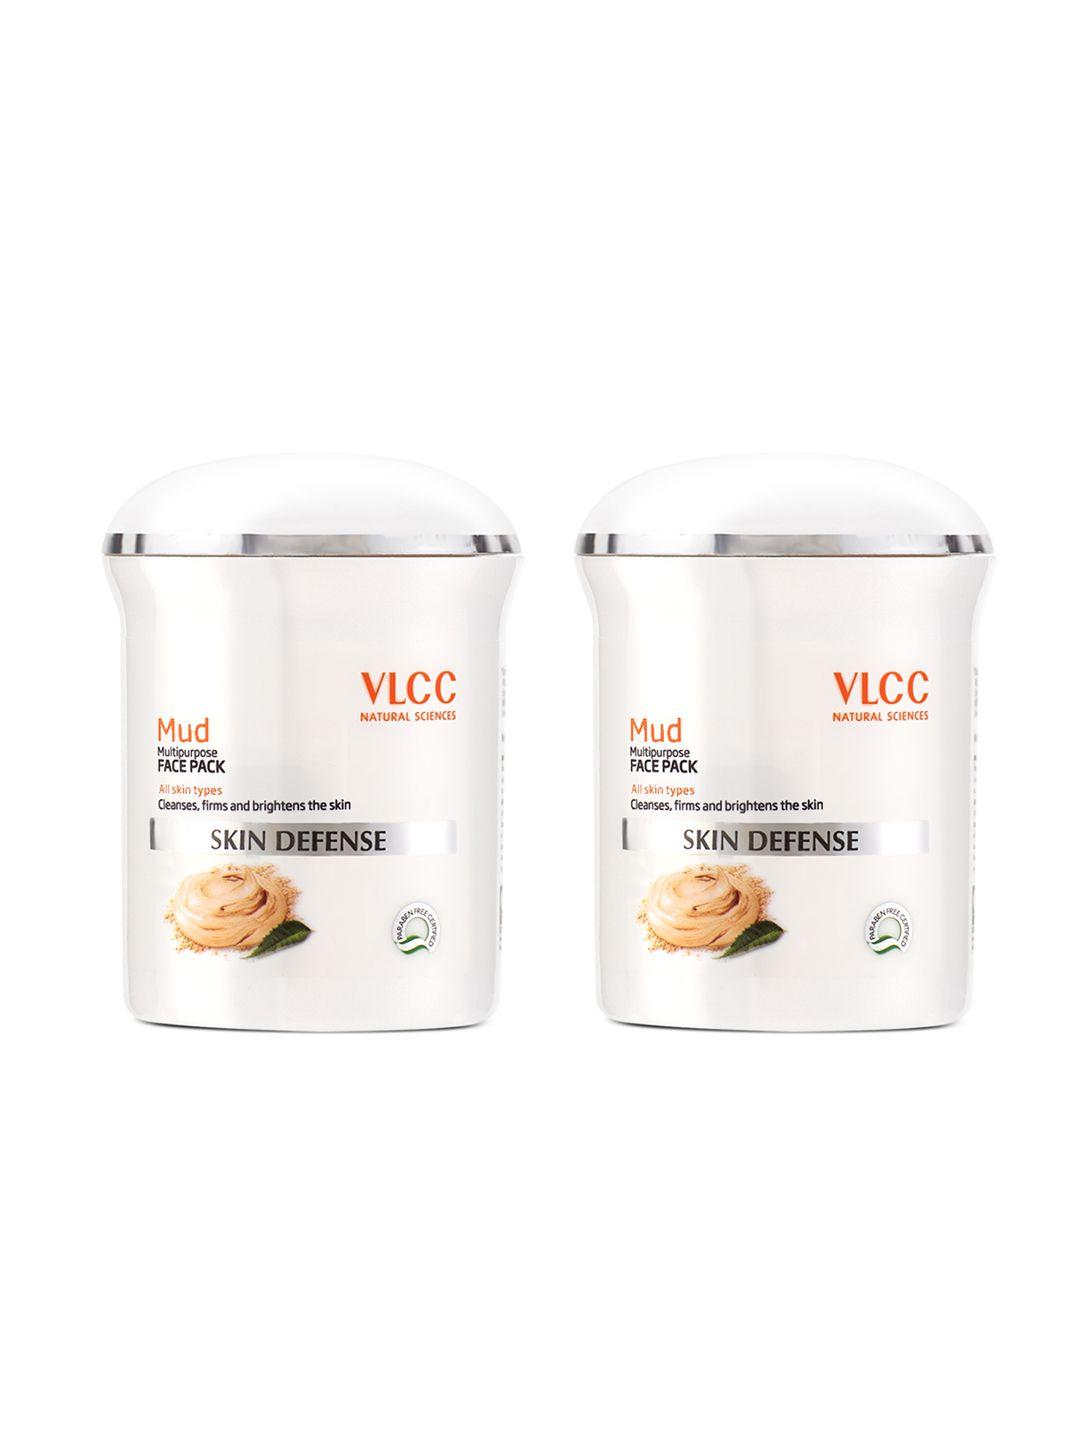 vlcc set of 2 skin defense multipurpose mud face pack to firm & brighten skin - 70g each